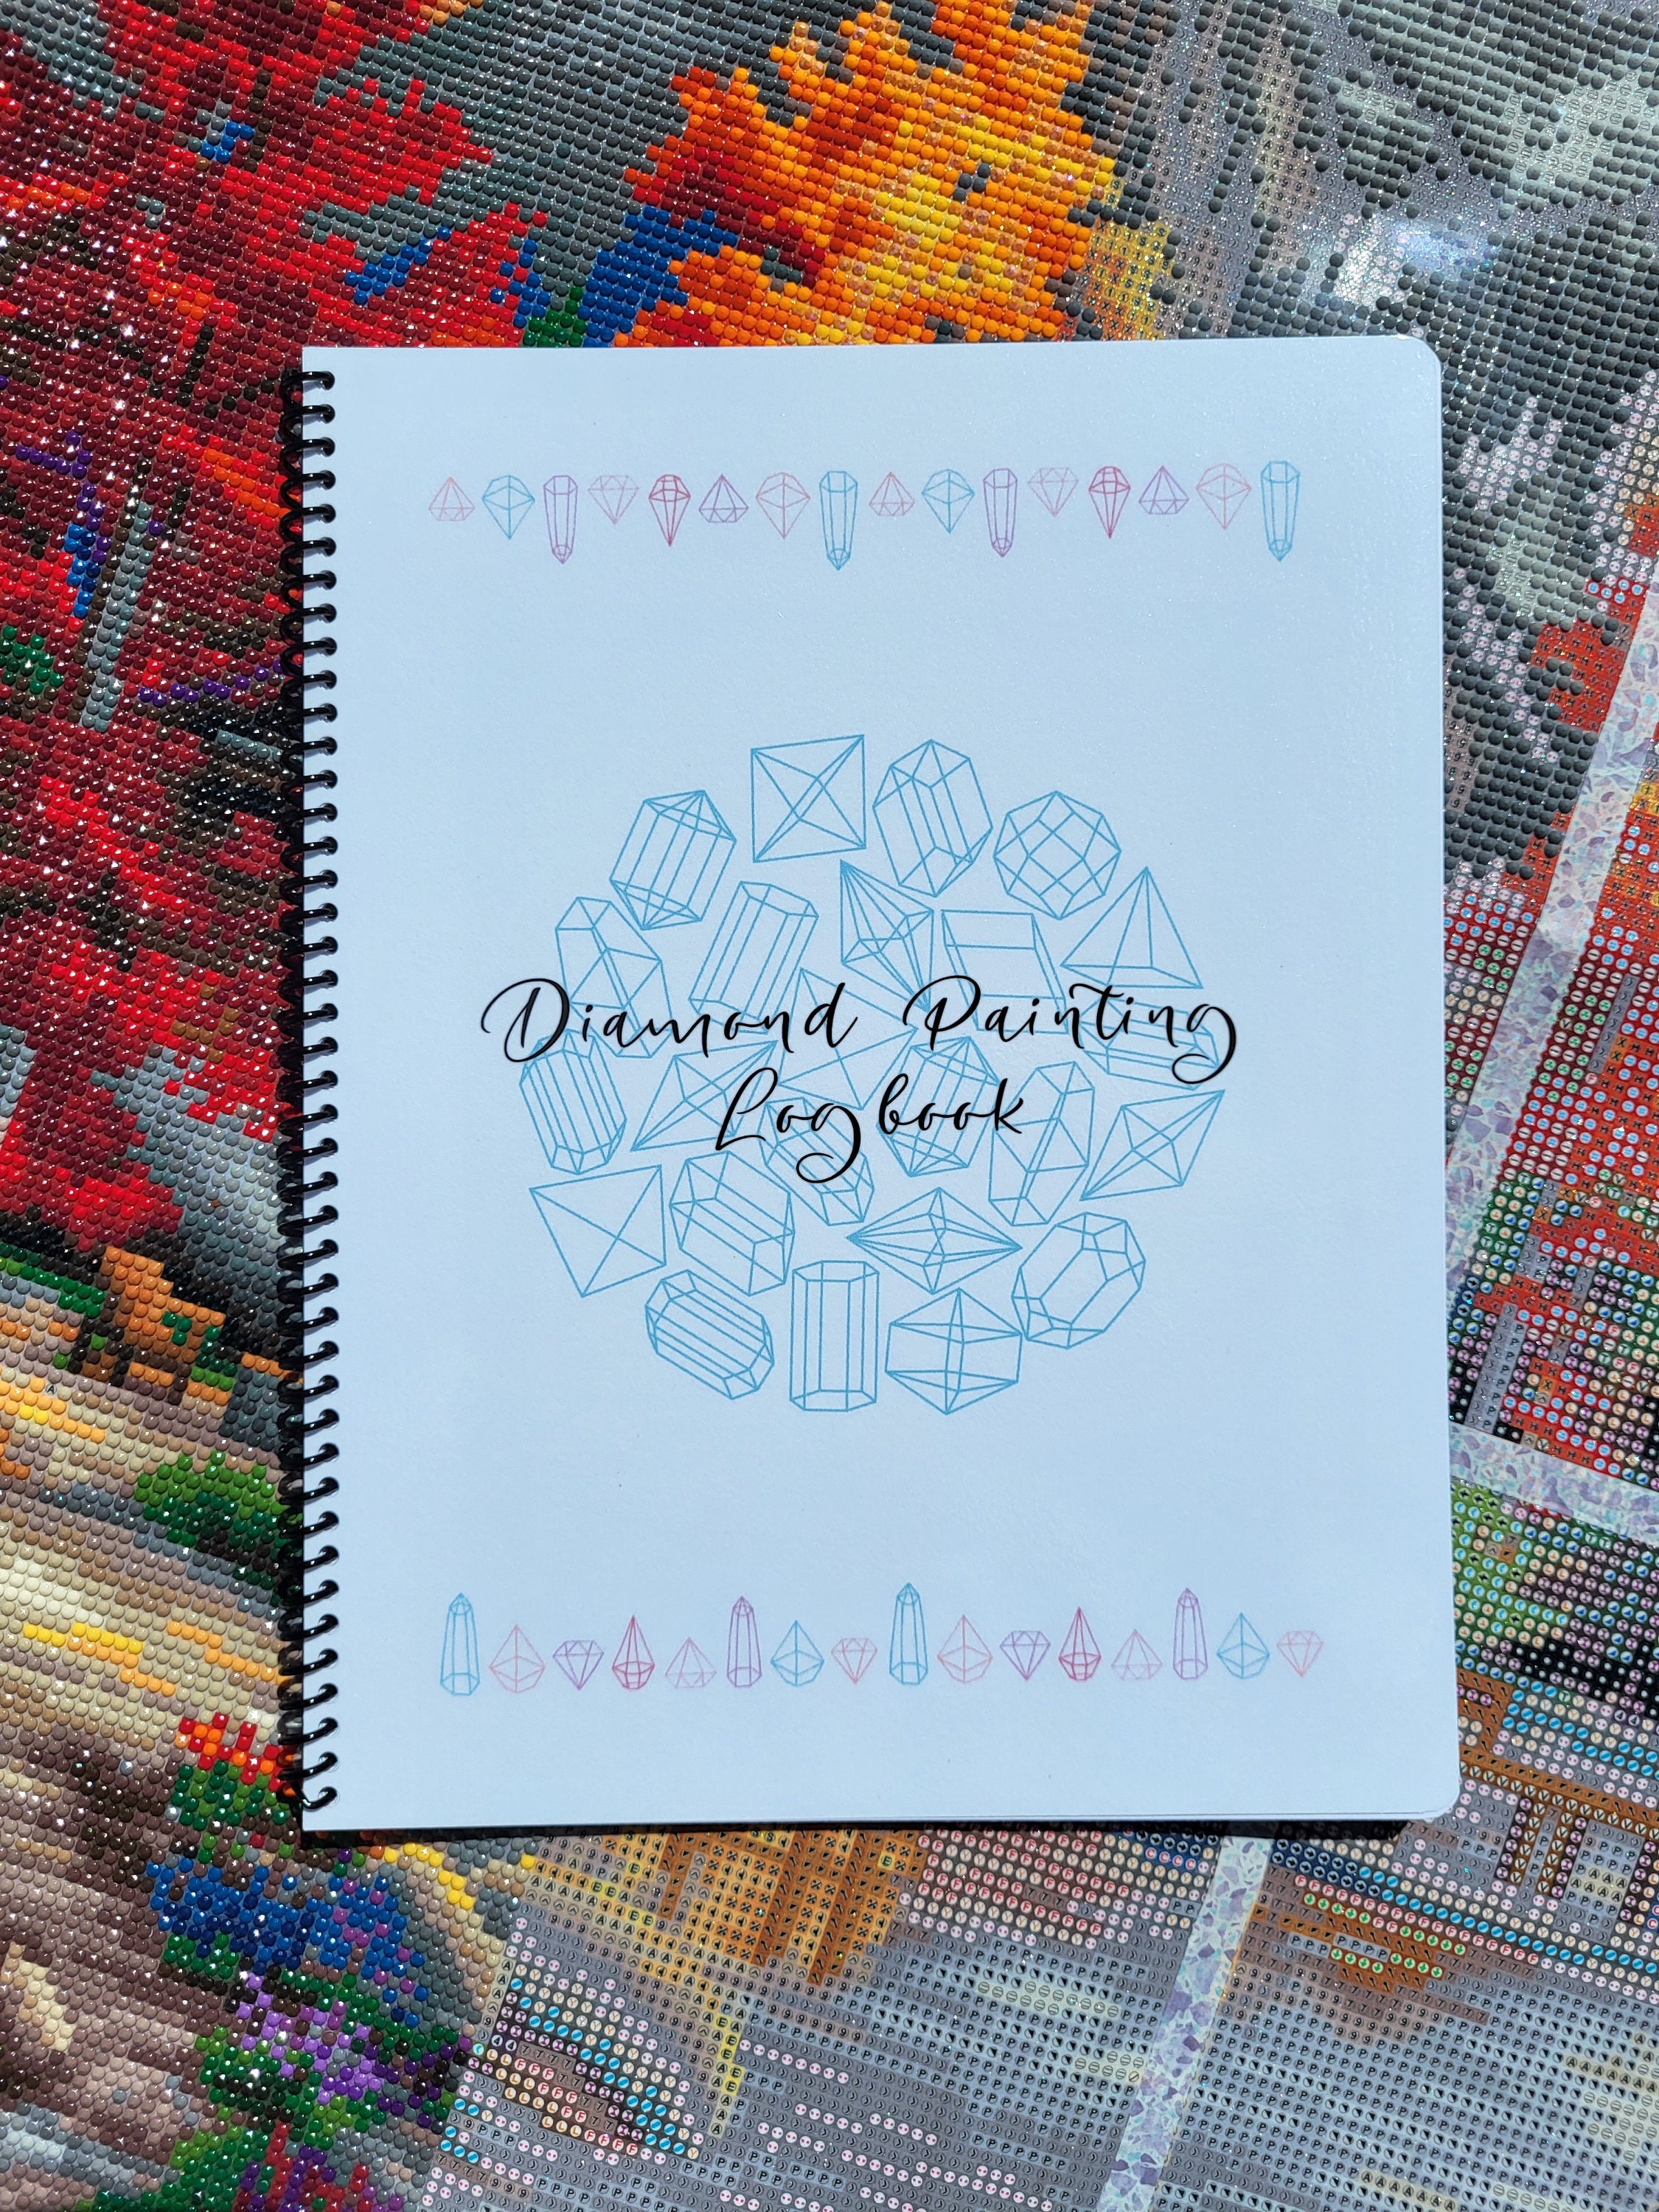 My Diamond Painting Log book flip through! : r/_startups